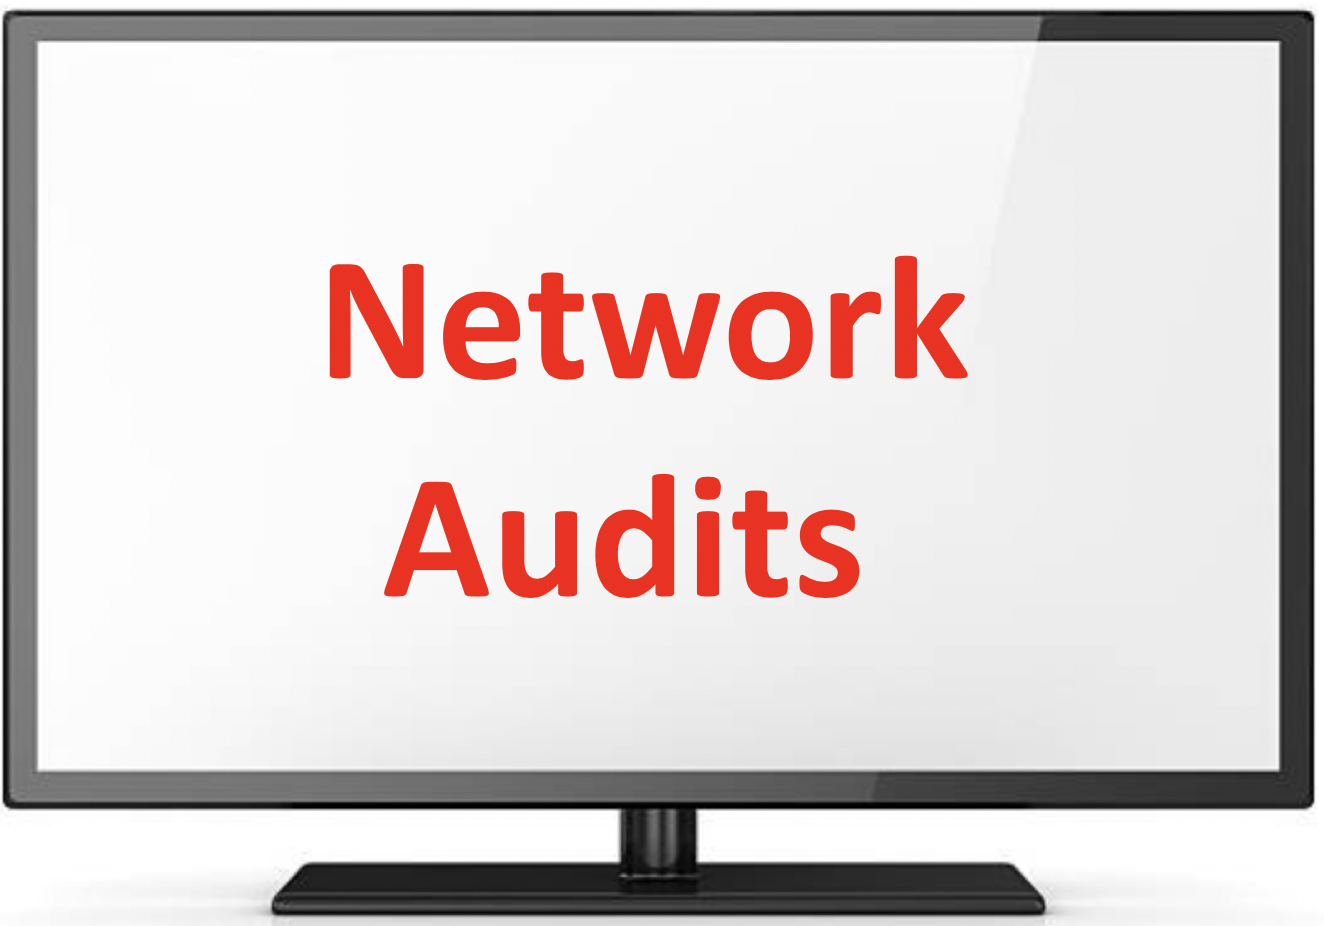 Network Audits